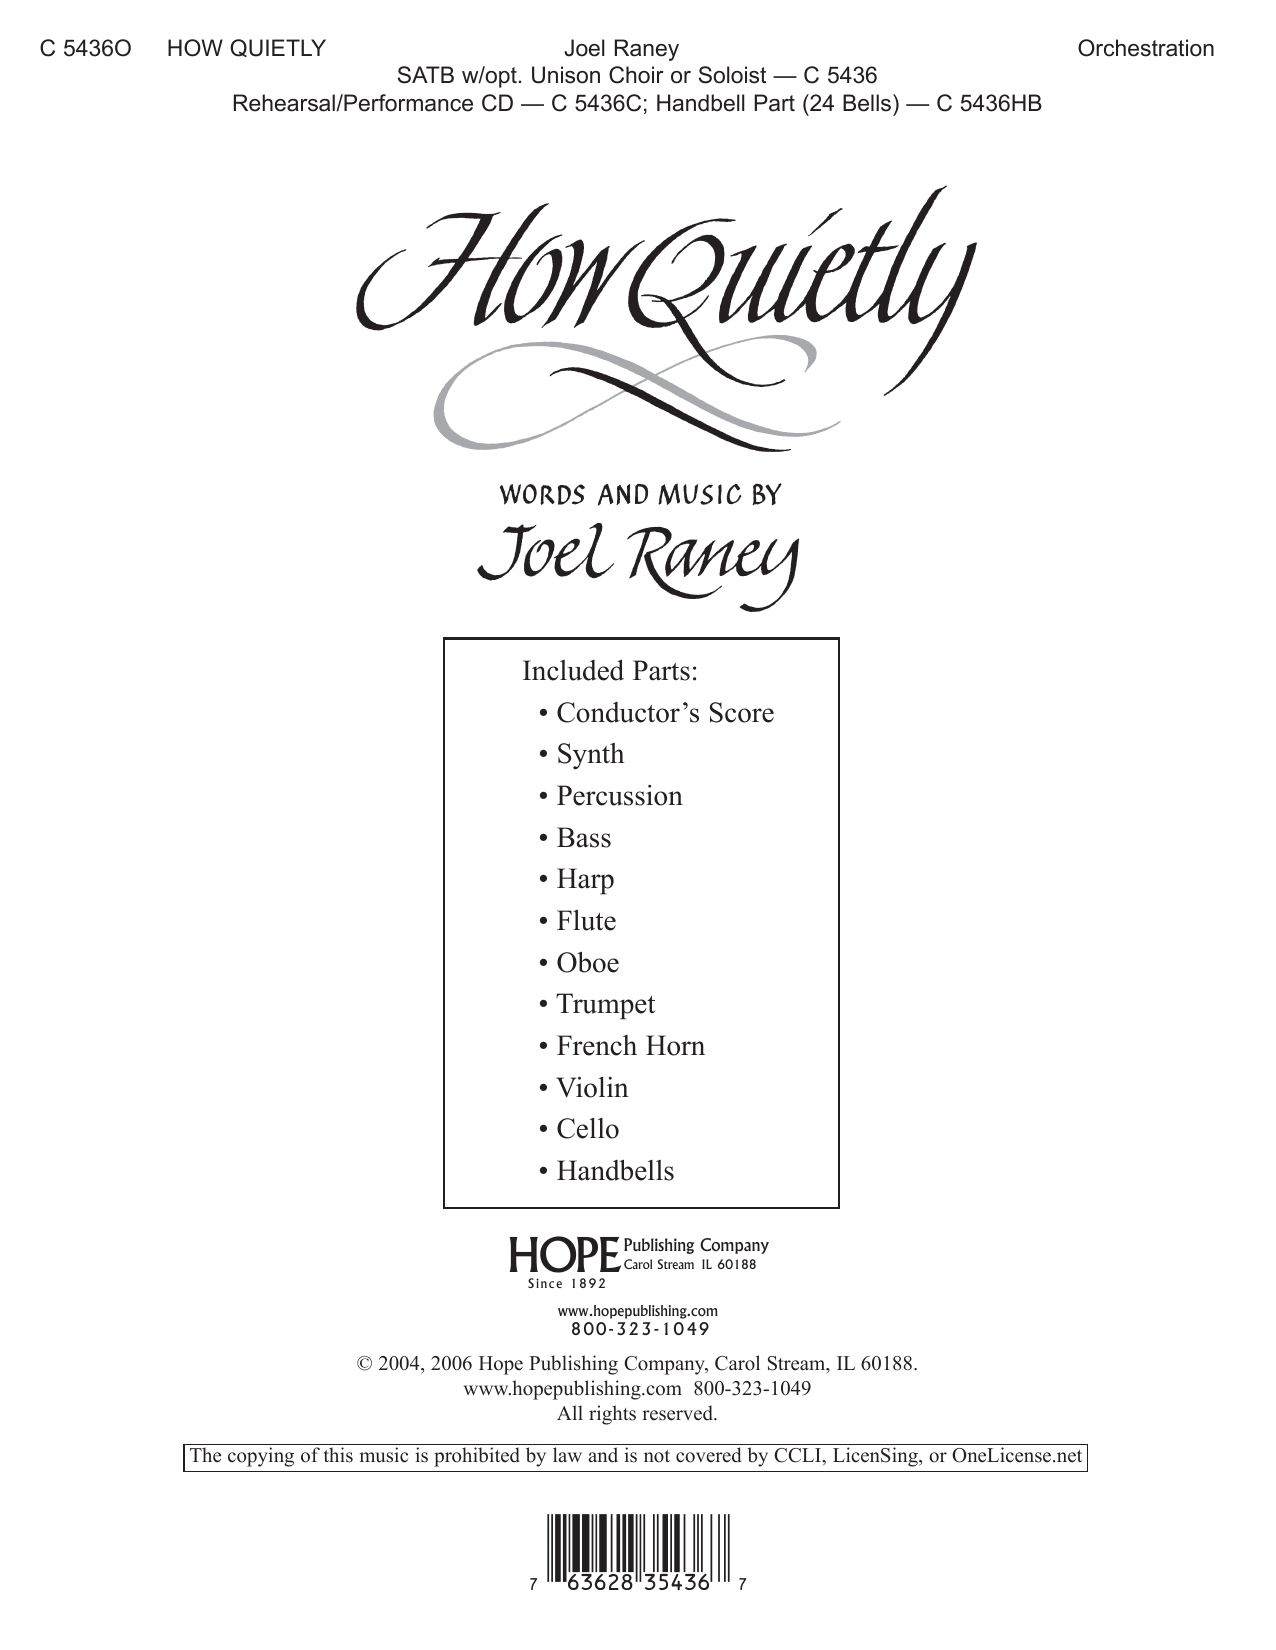 Download Joel Raney How Quietly - Full Score Sheet Music